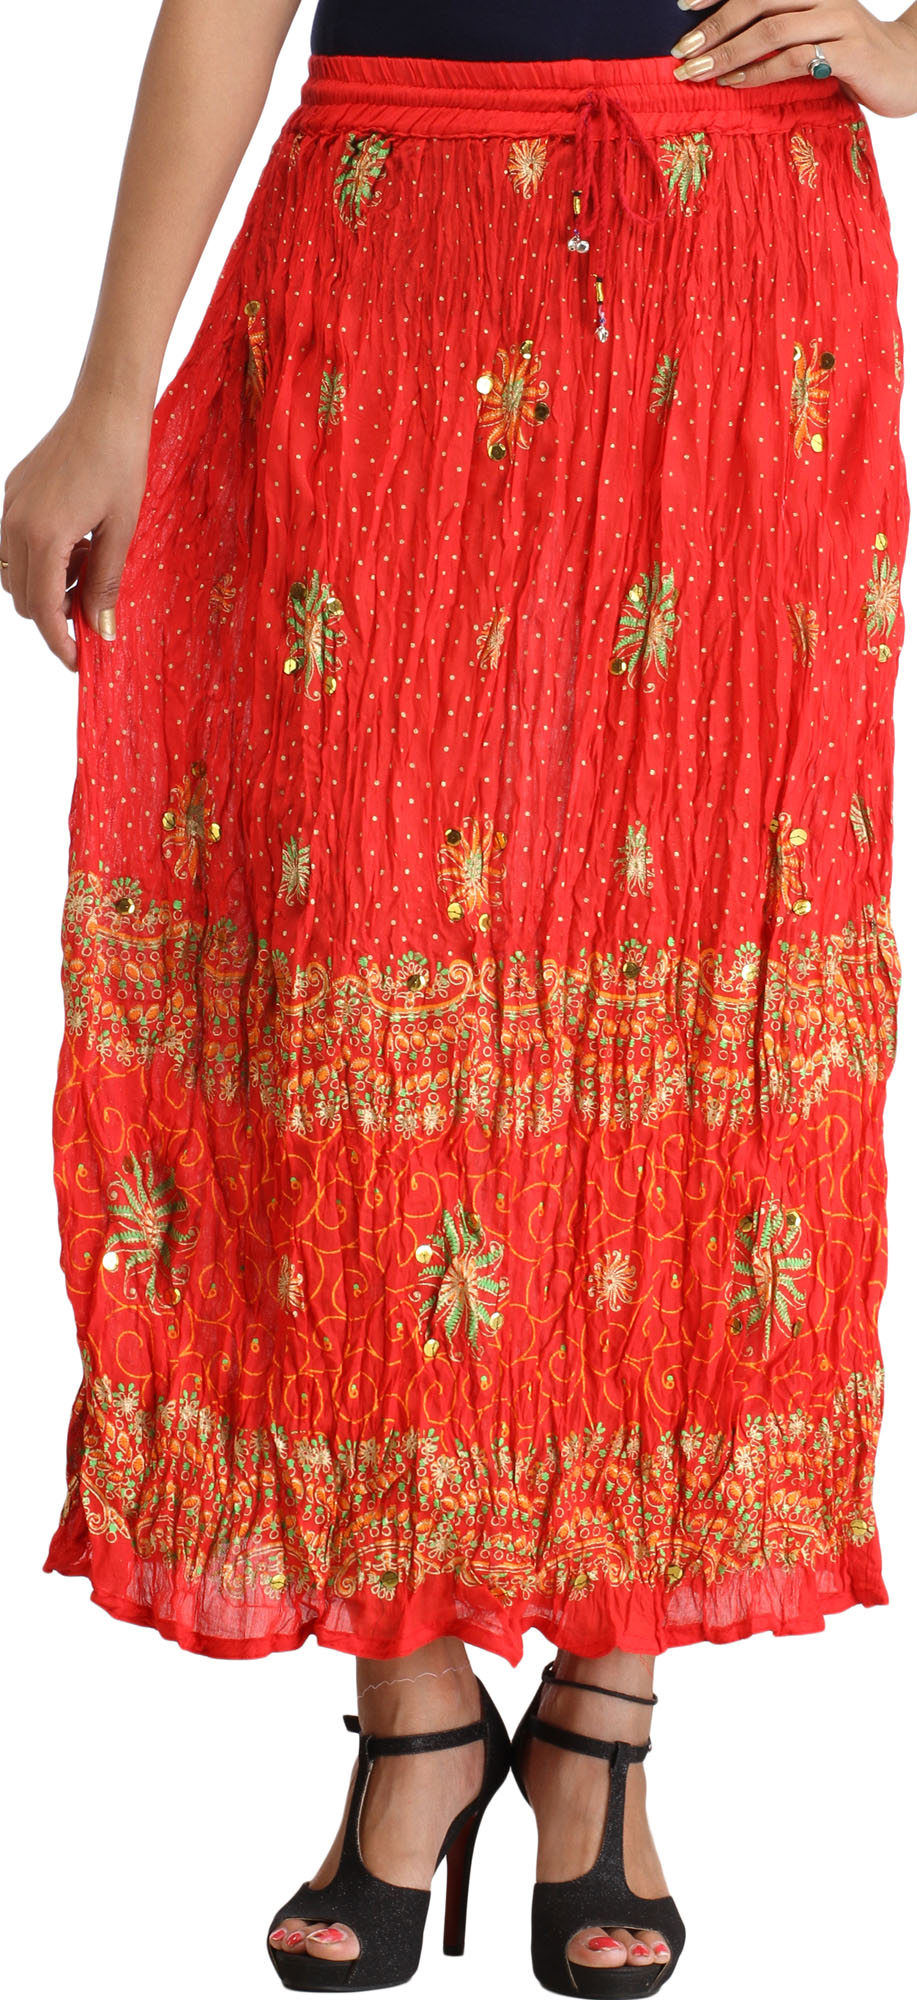 Ethnic Long Skirts - Buy Ethnic Long Skirts online in India